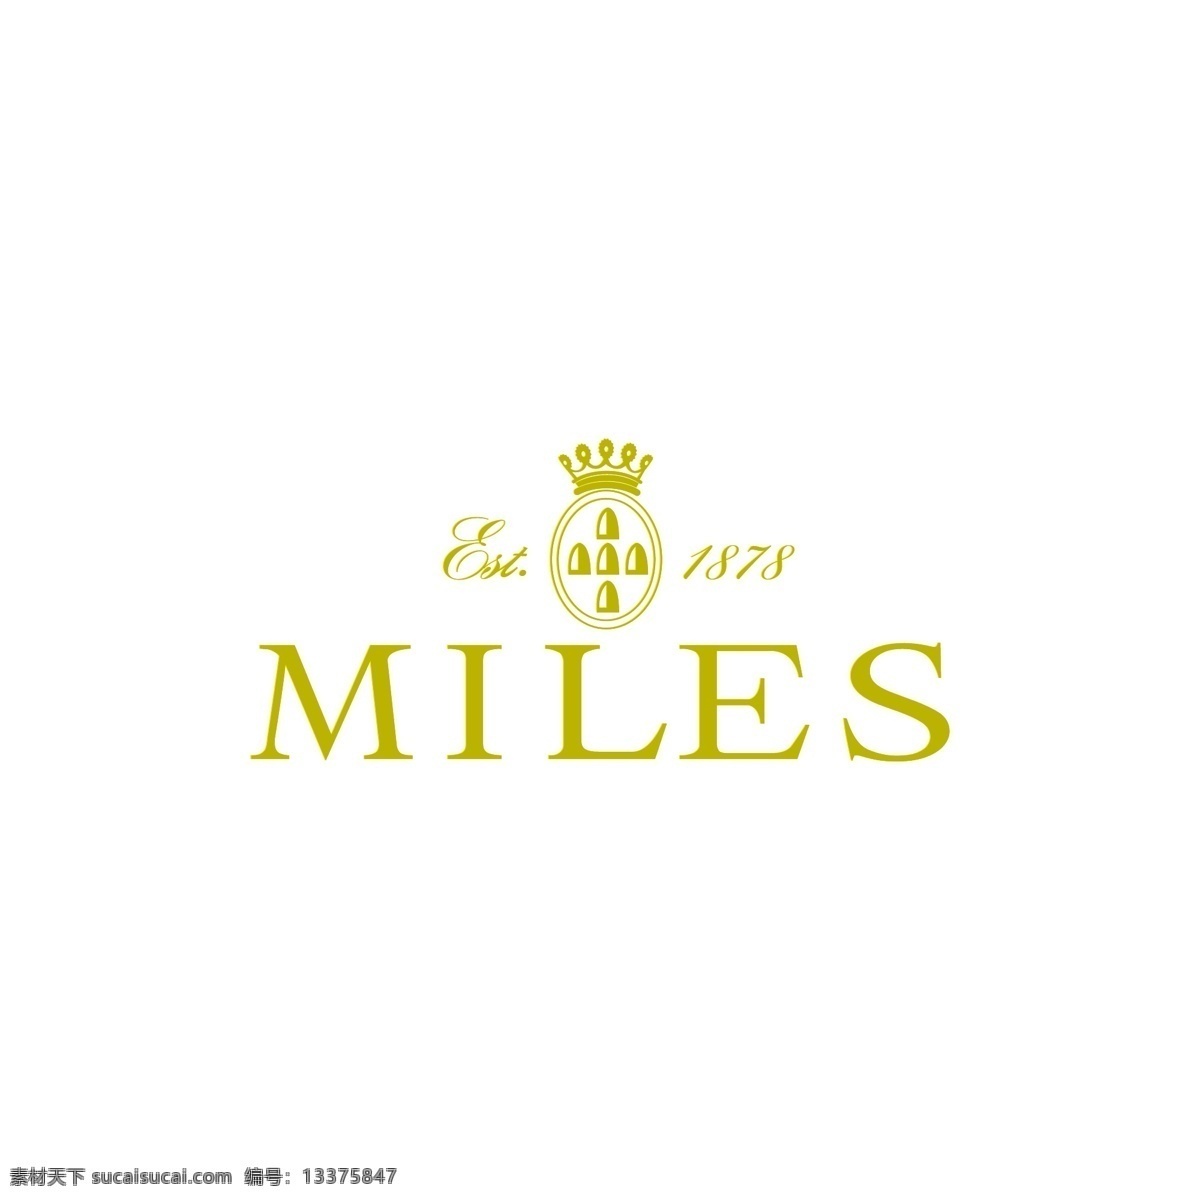 miles logo大全 logo 设计欣赏 商业矢量 矢量下载 食物 品牌 标志 标志设计 欣赏 网页矢量 矢量图 其他矢量图